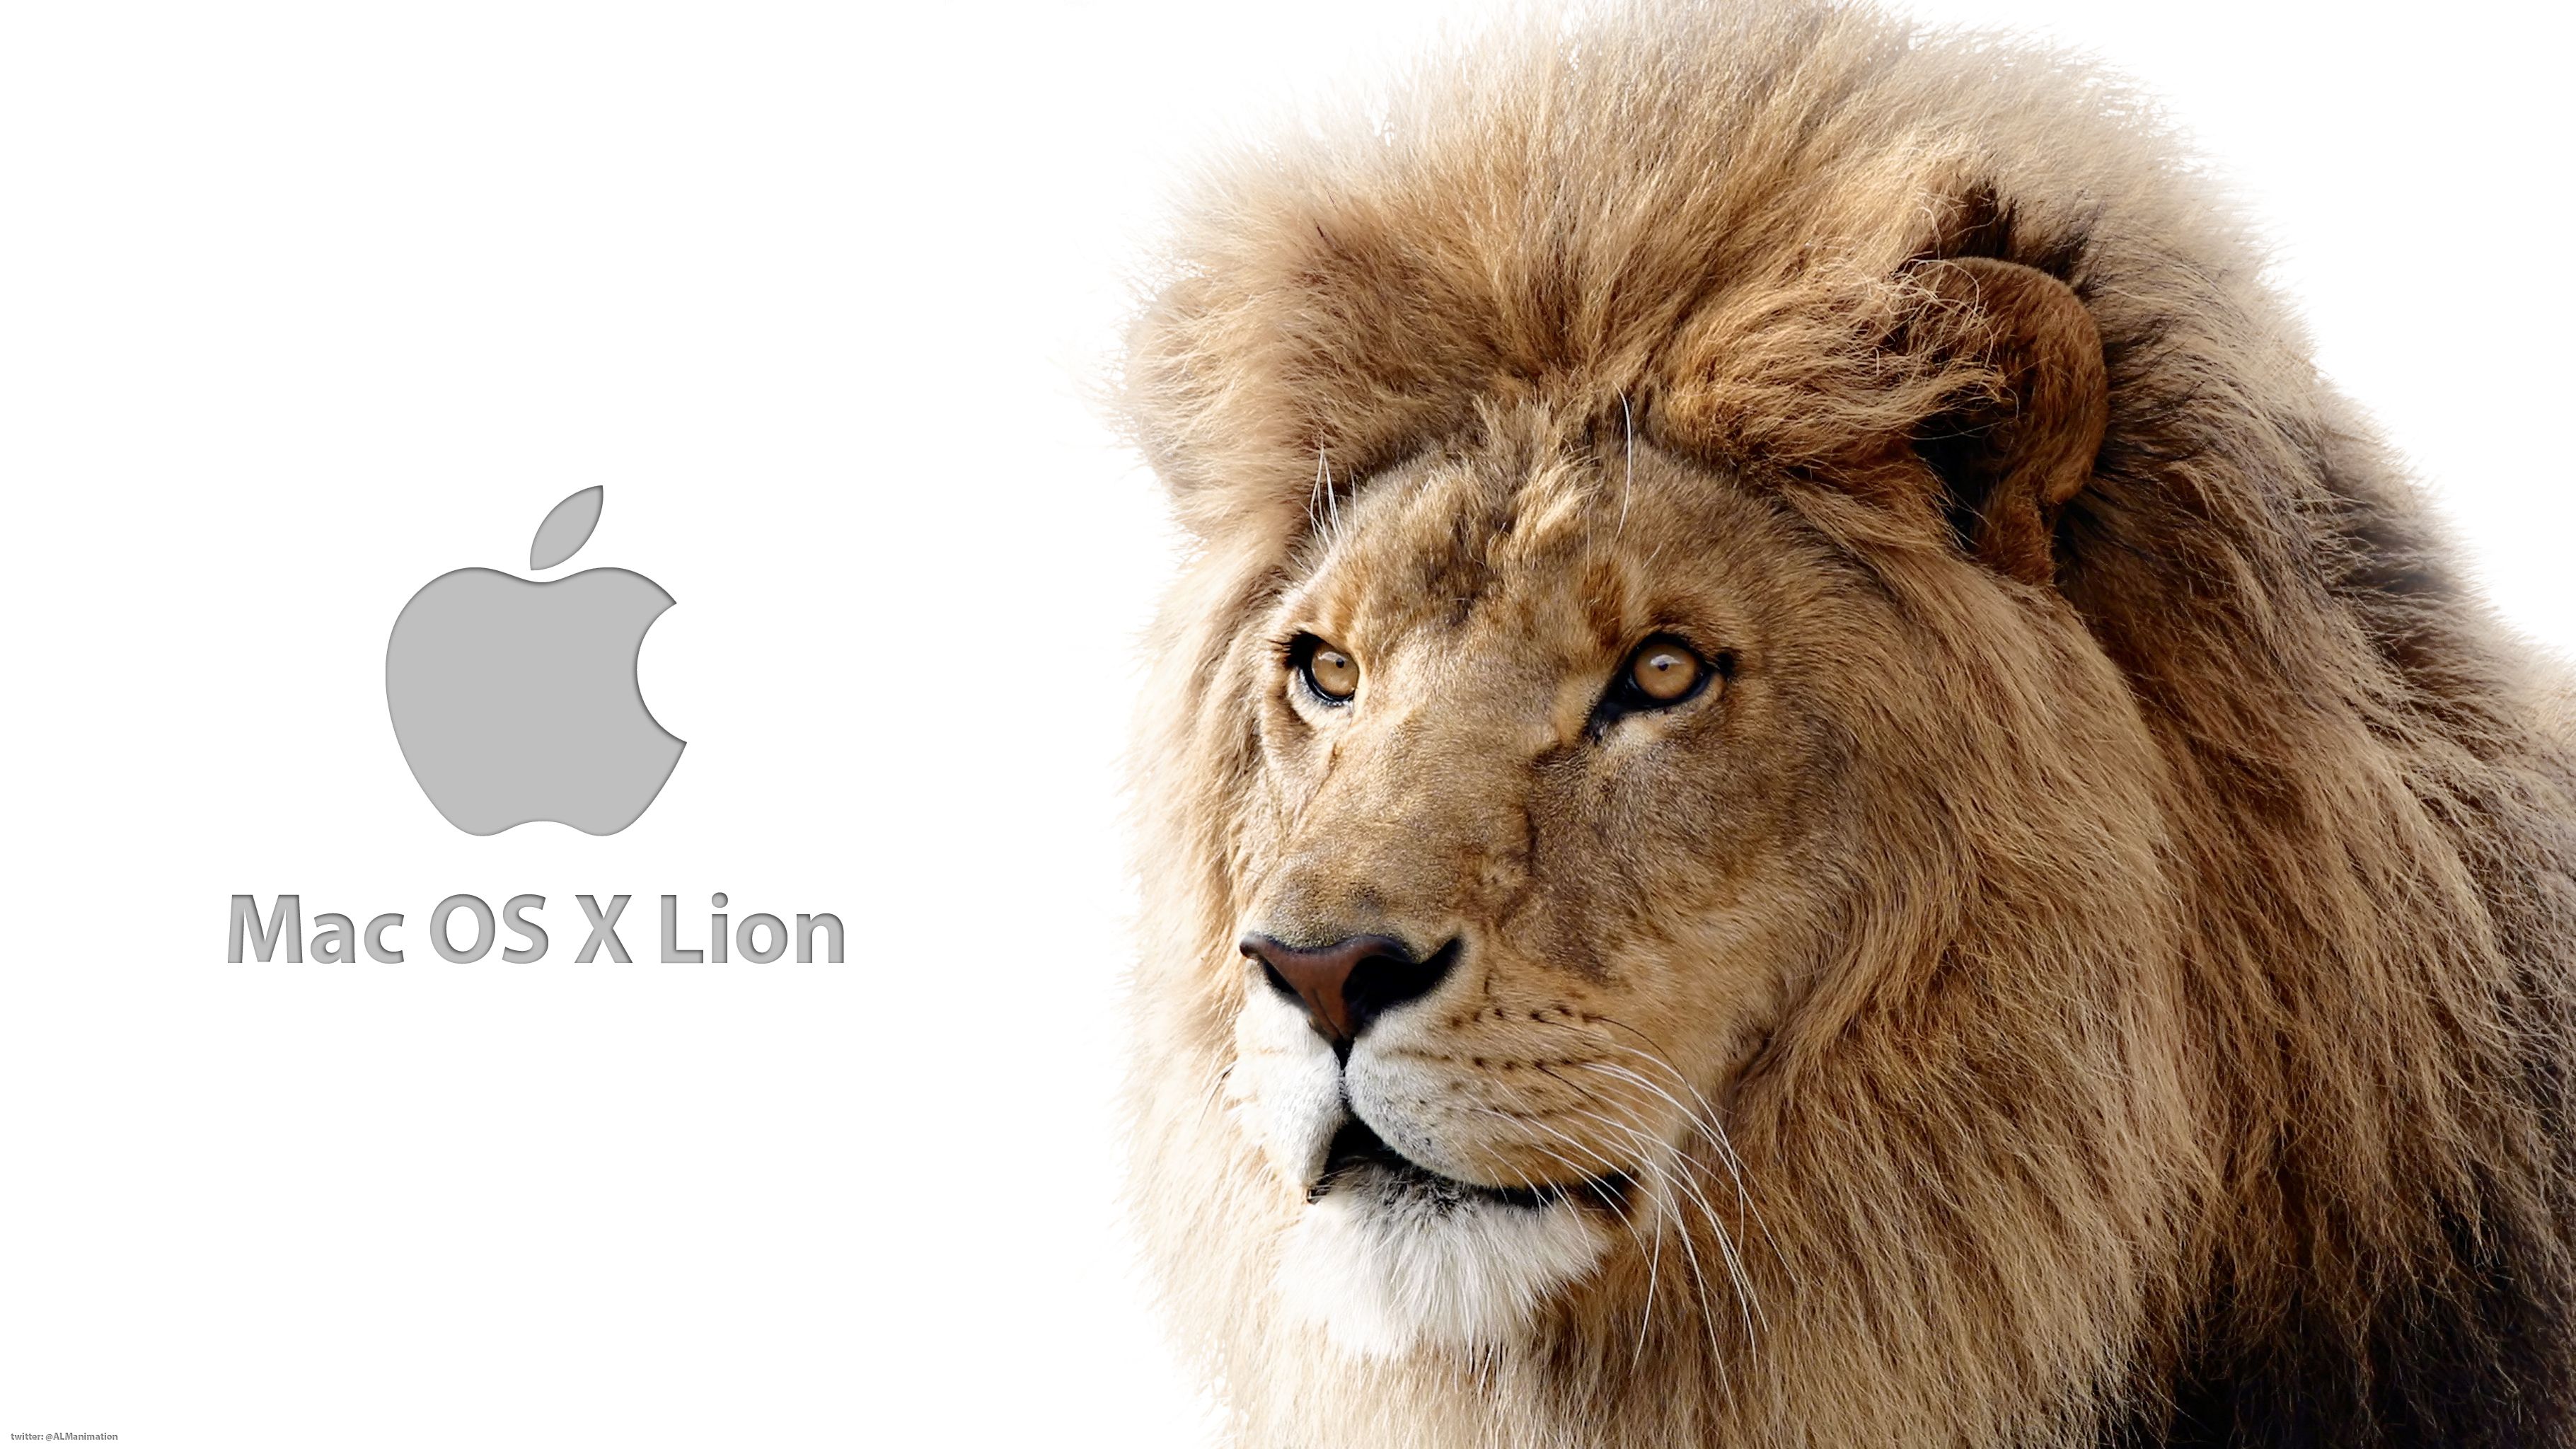 Mac OS X Lion Wallpaper 3 by almanimation on DeviantArt